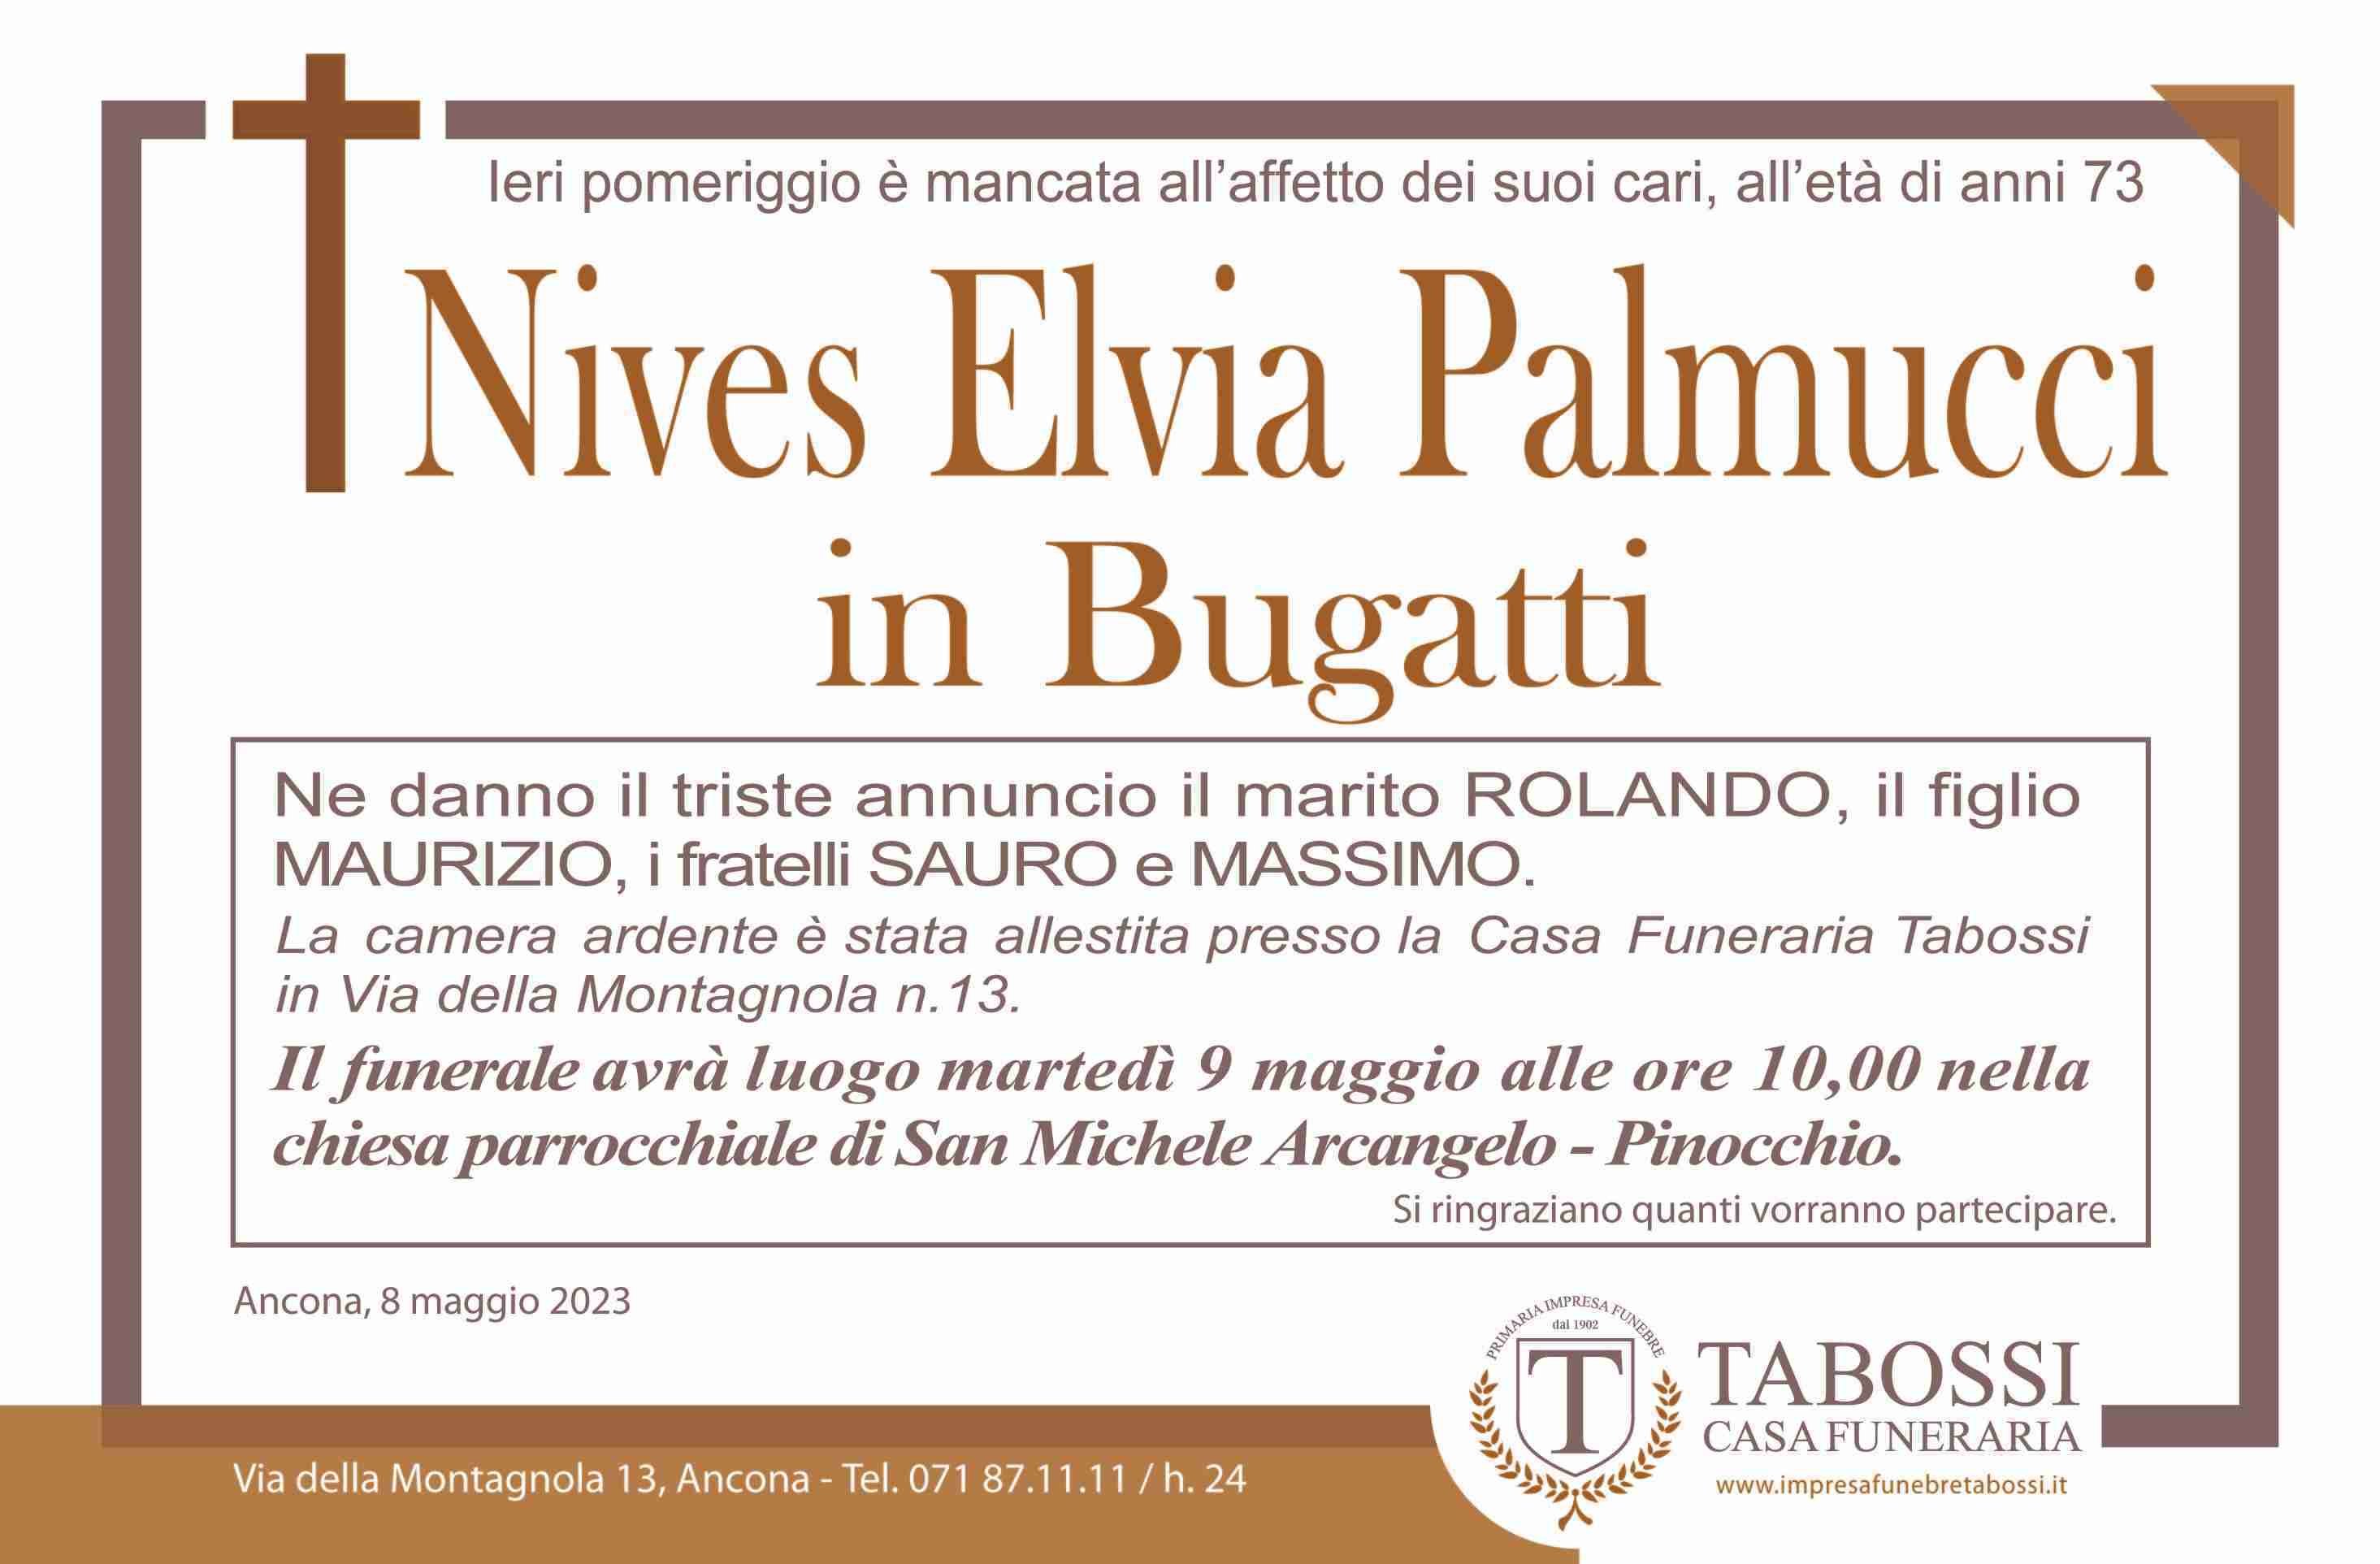 Nives Elvia Palmucci